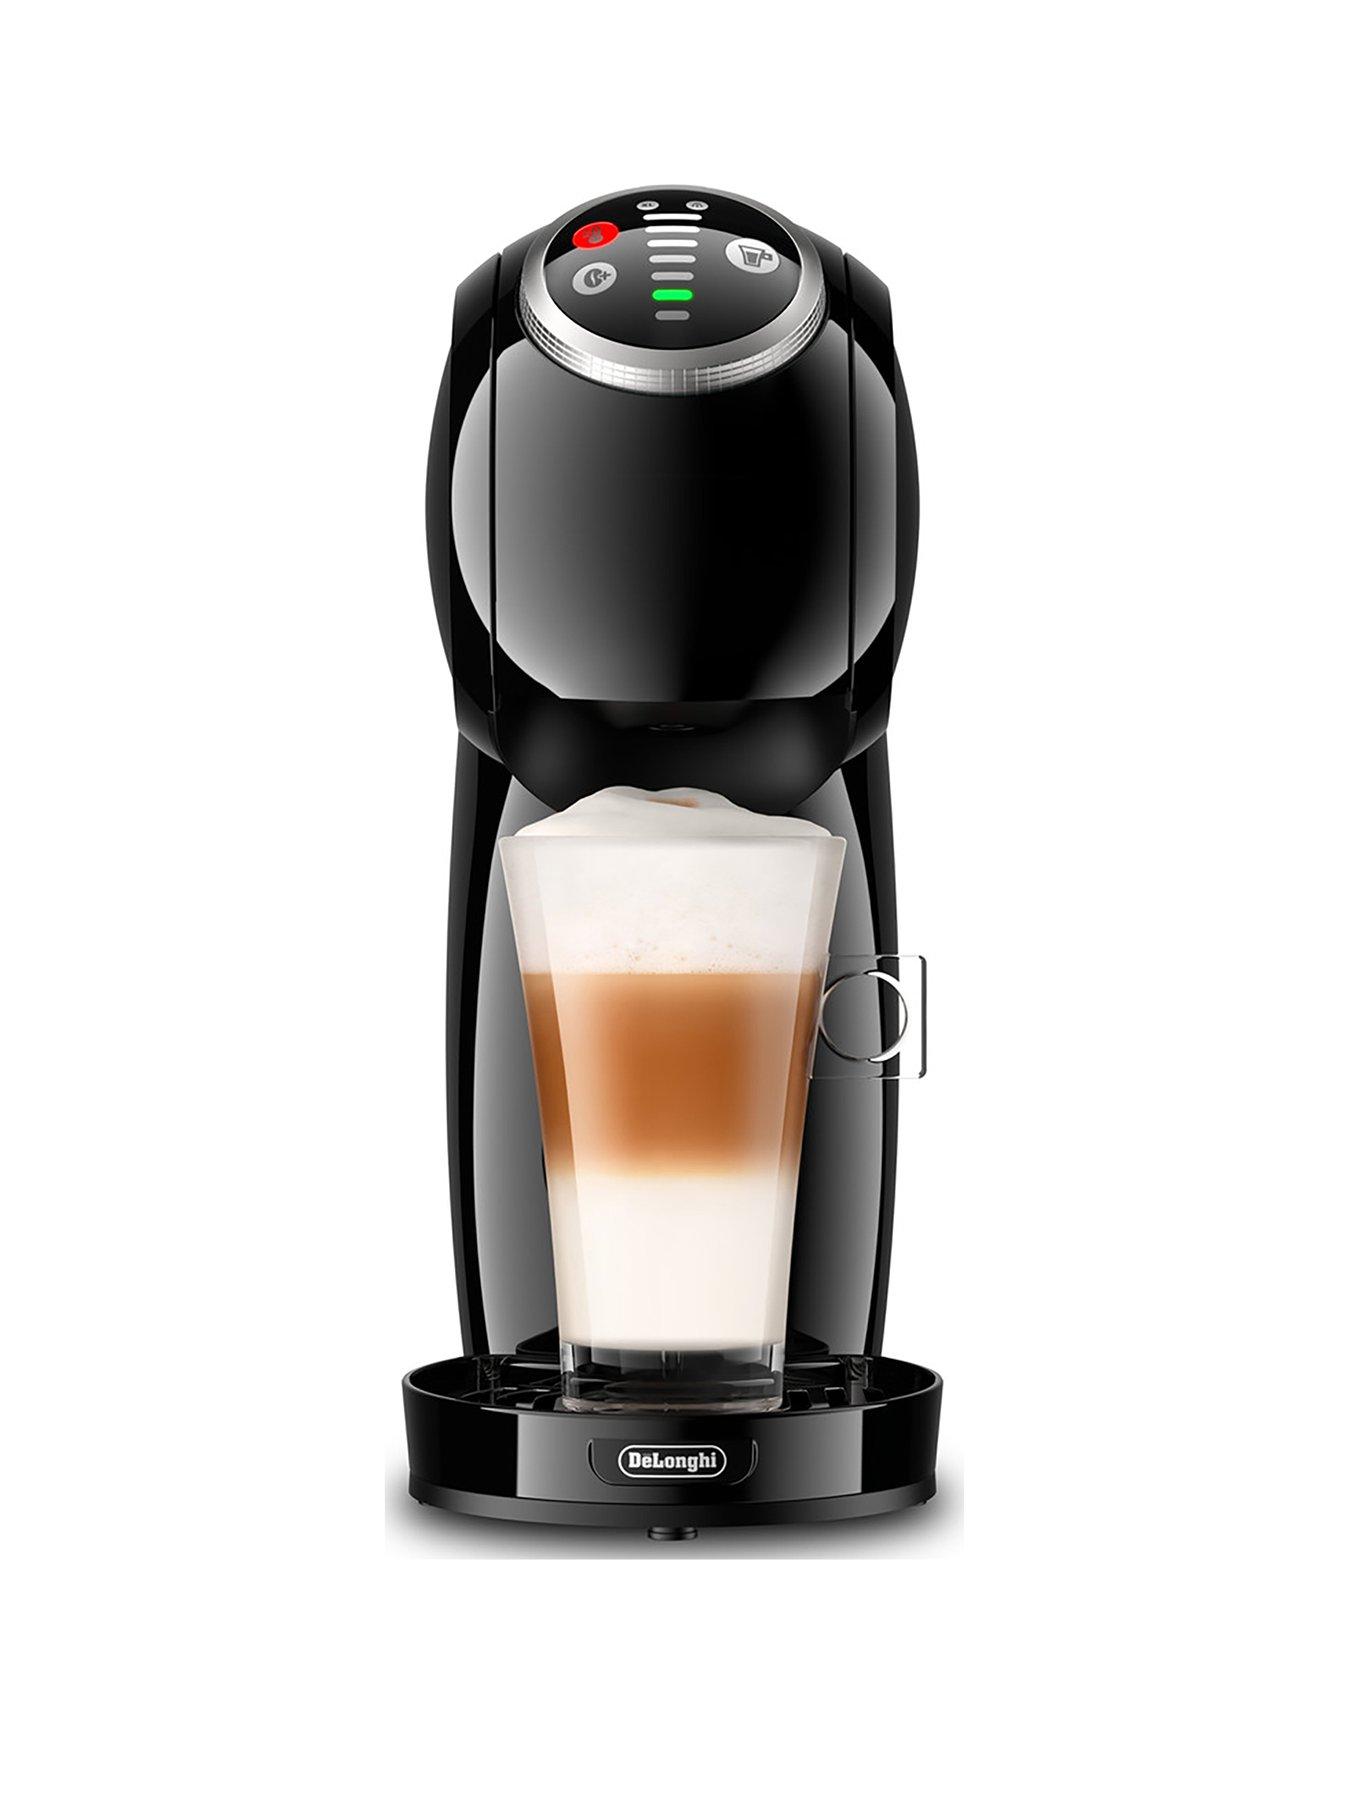 Home Coffee Machines, Espresso Makers